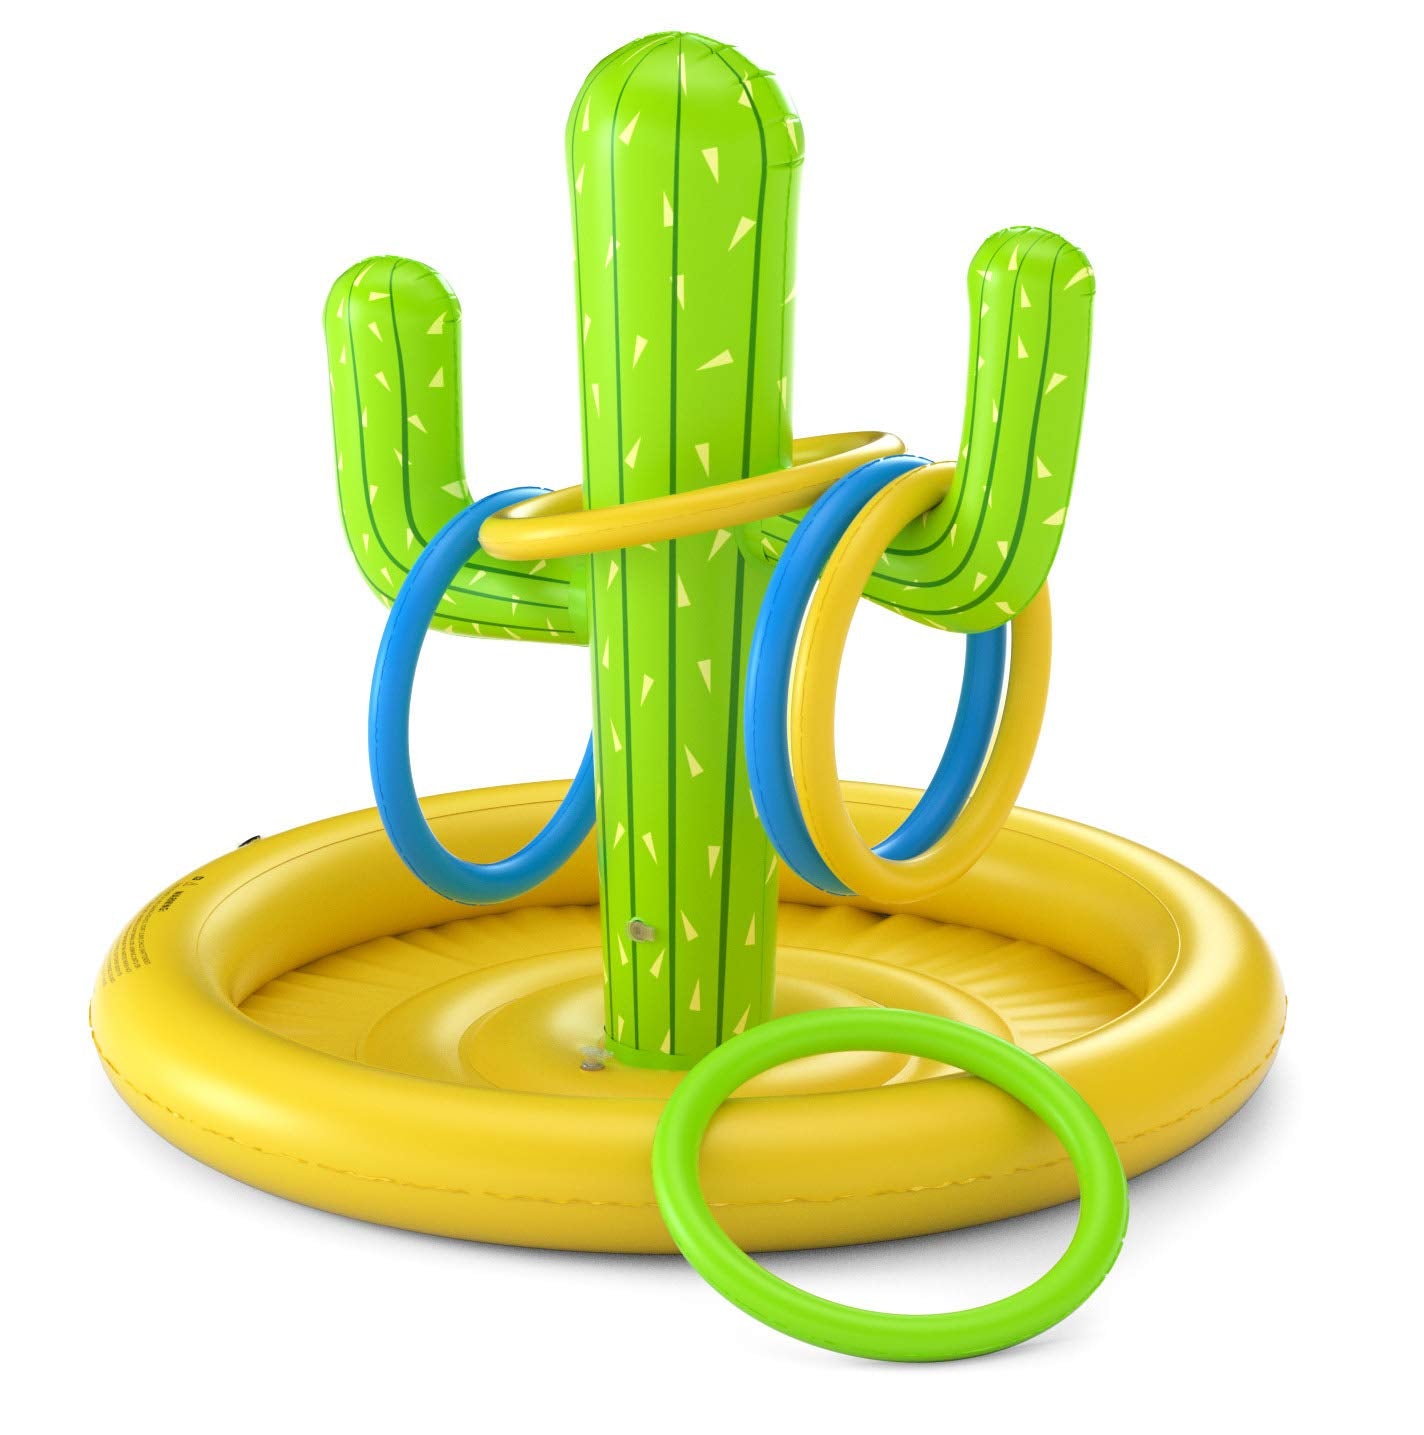 Inflatable Cactus Drink Holder - Jasonwell